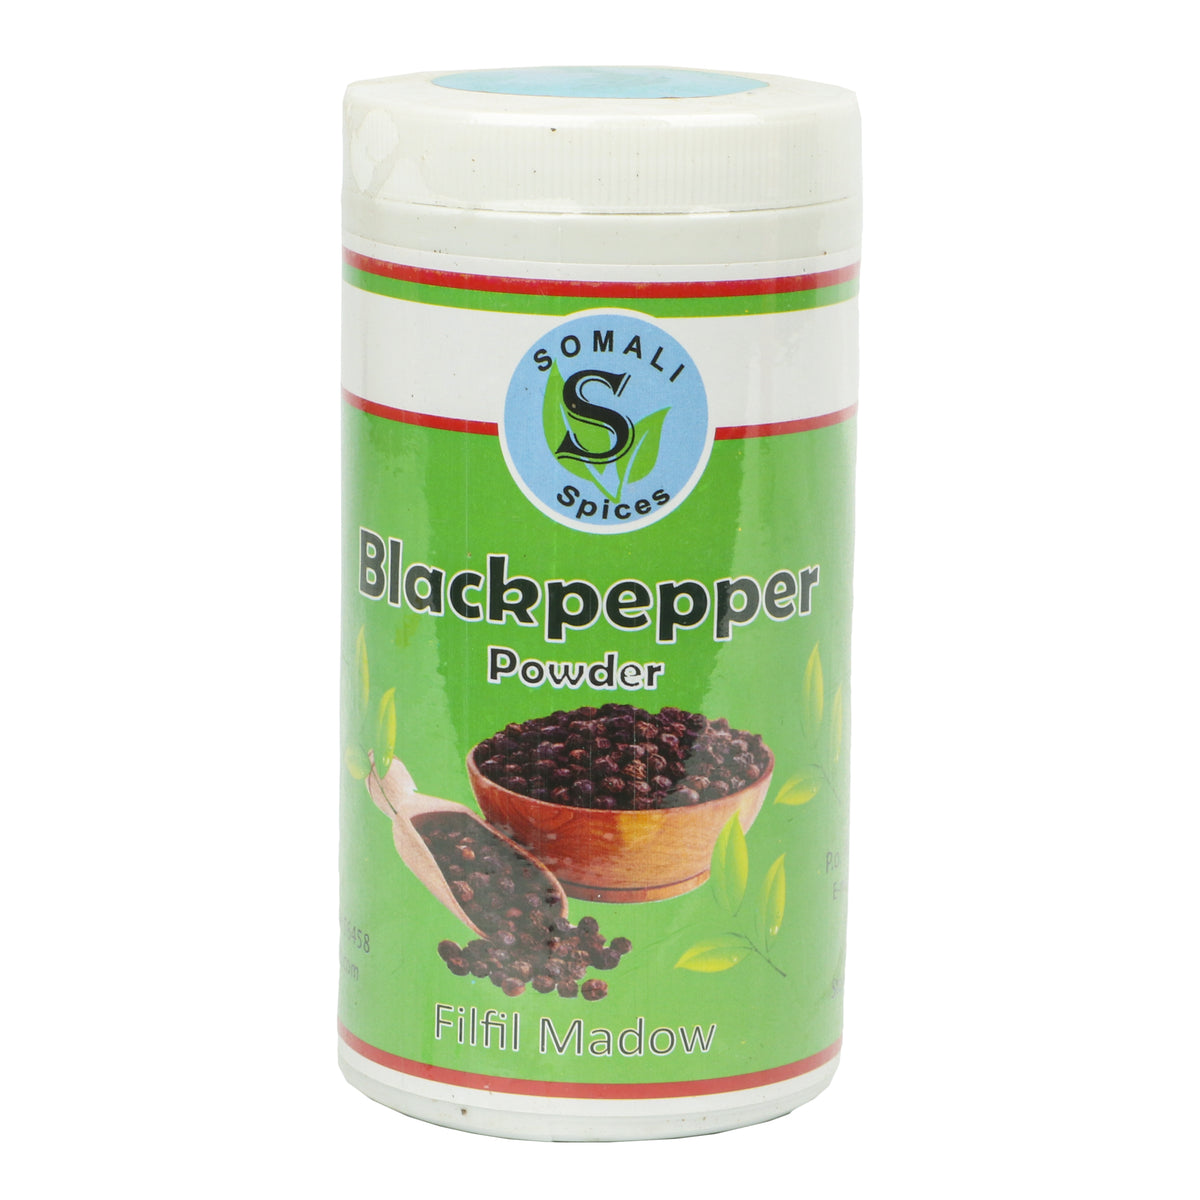 Somali Spices Filfil Madow (Black Pepper Powder)